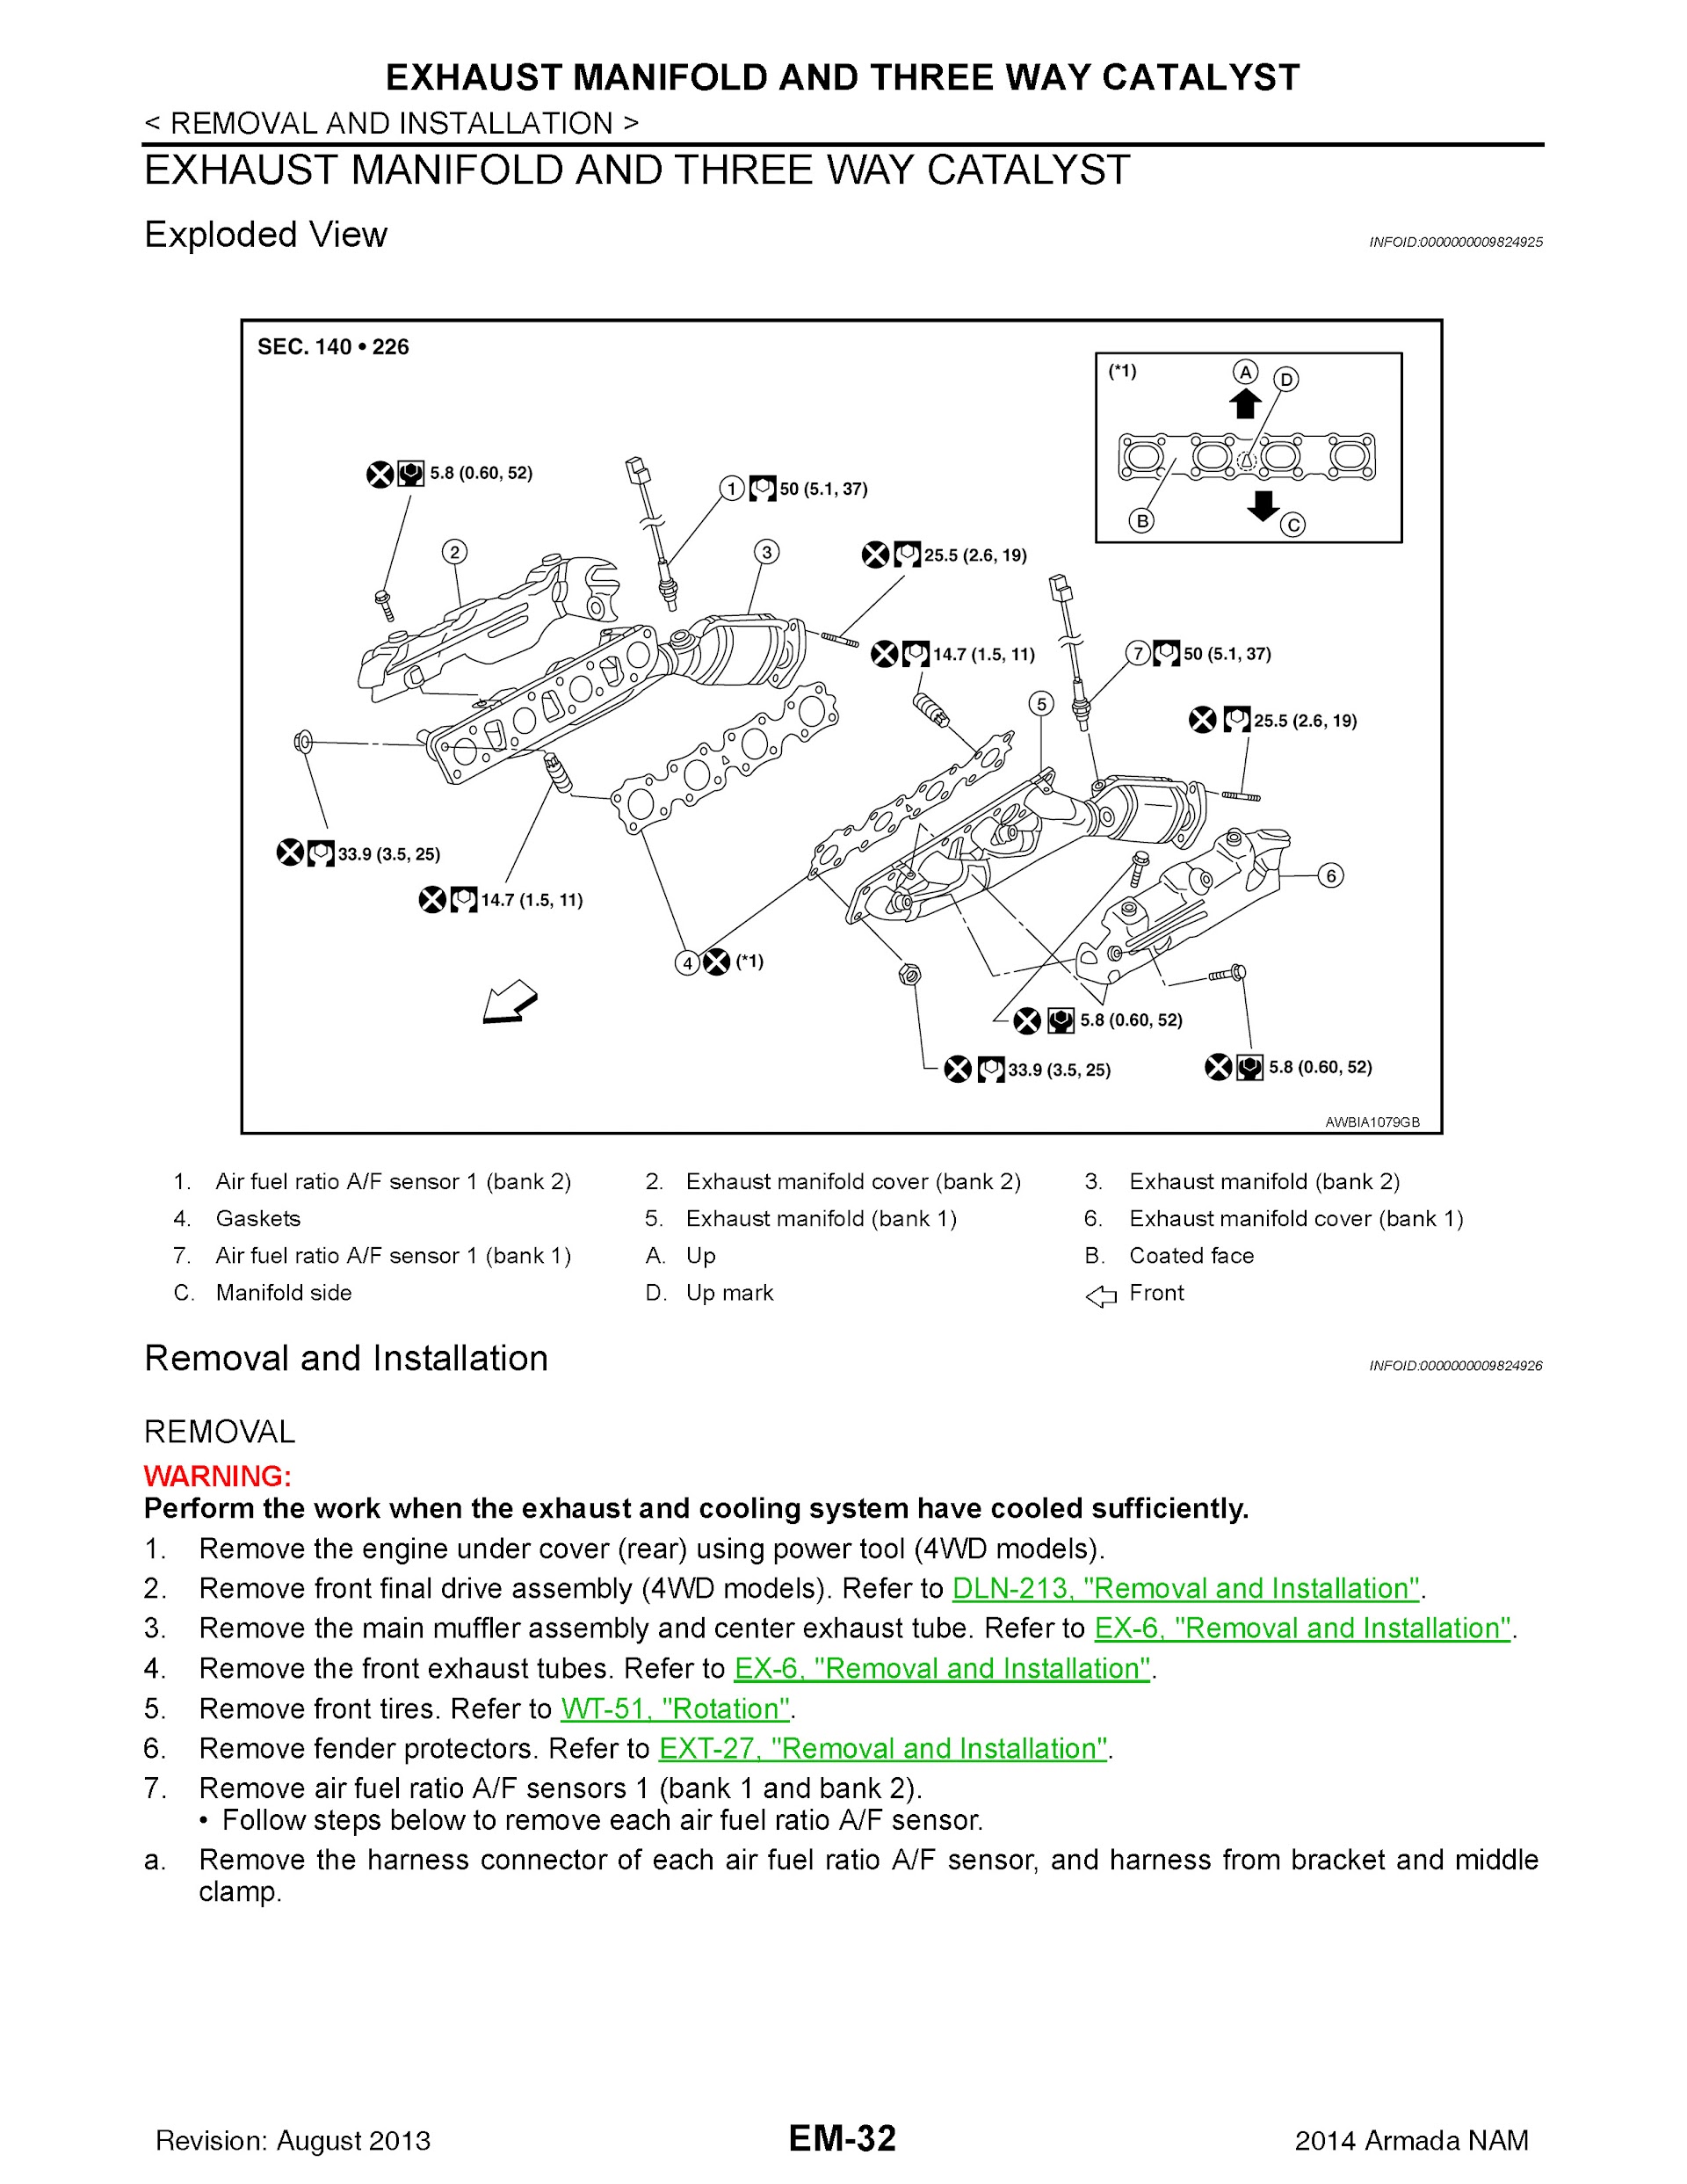 CONTENTS: 2014 Nissan Armada Repair Manual, Exhaust Manifold and Three Way Catalyst